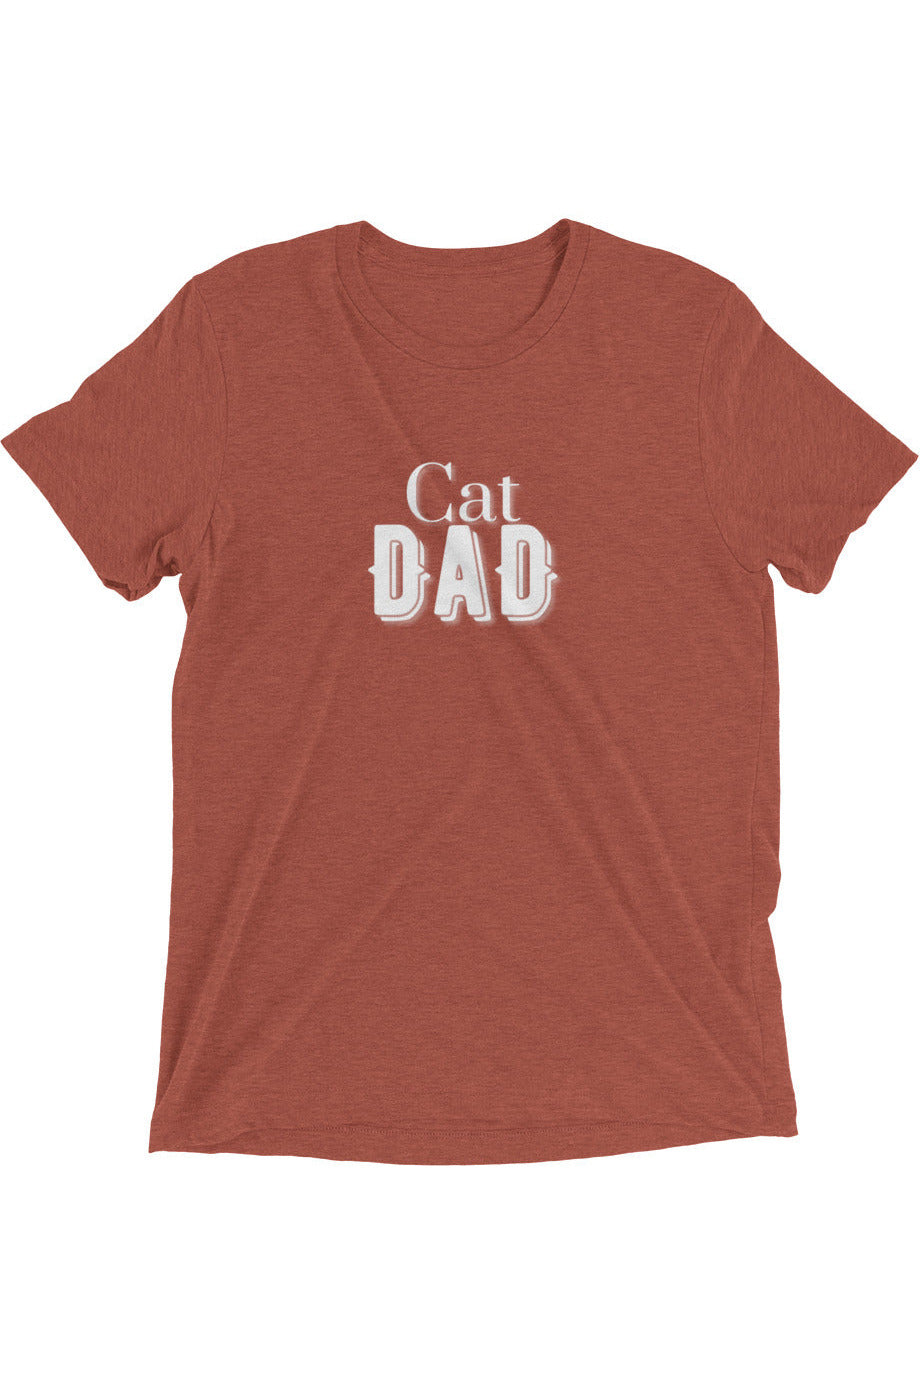 "Cat Dad" - Short sleeve t-shirt